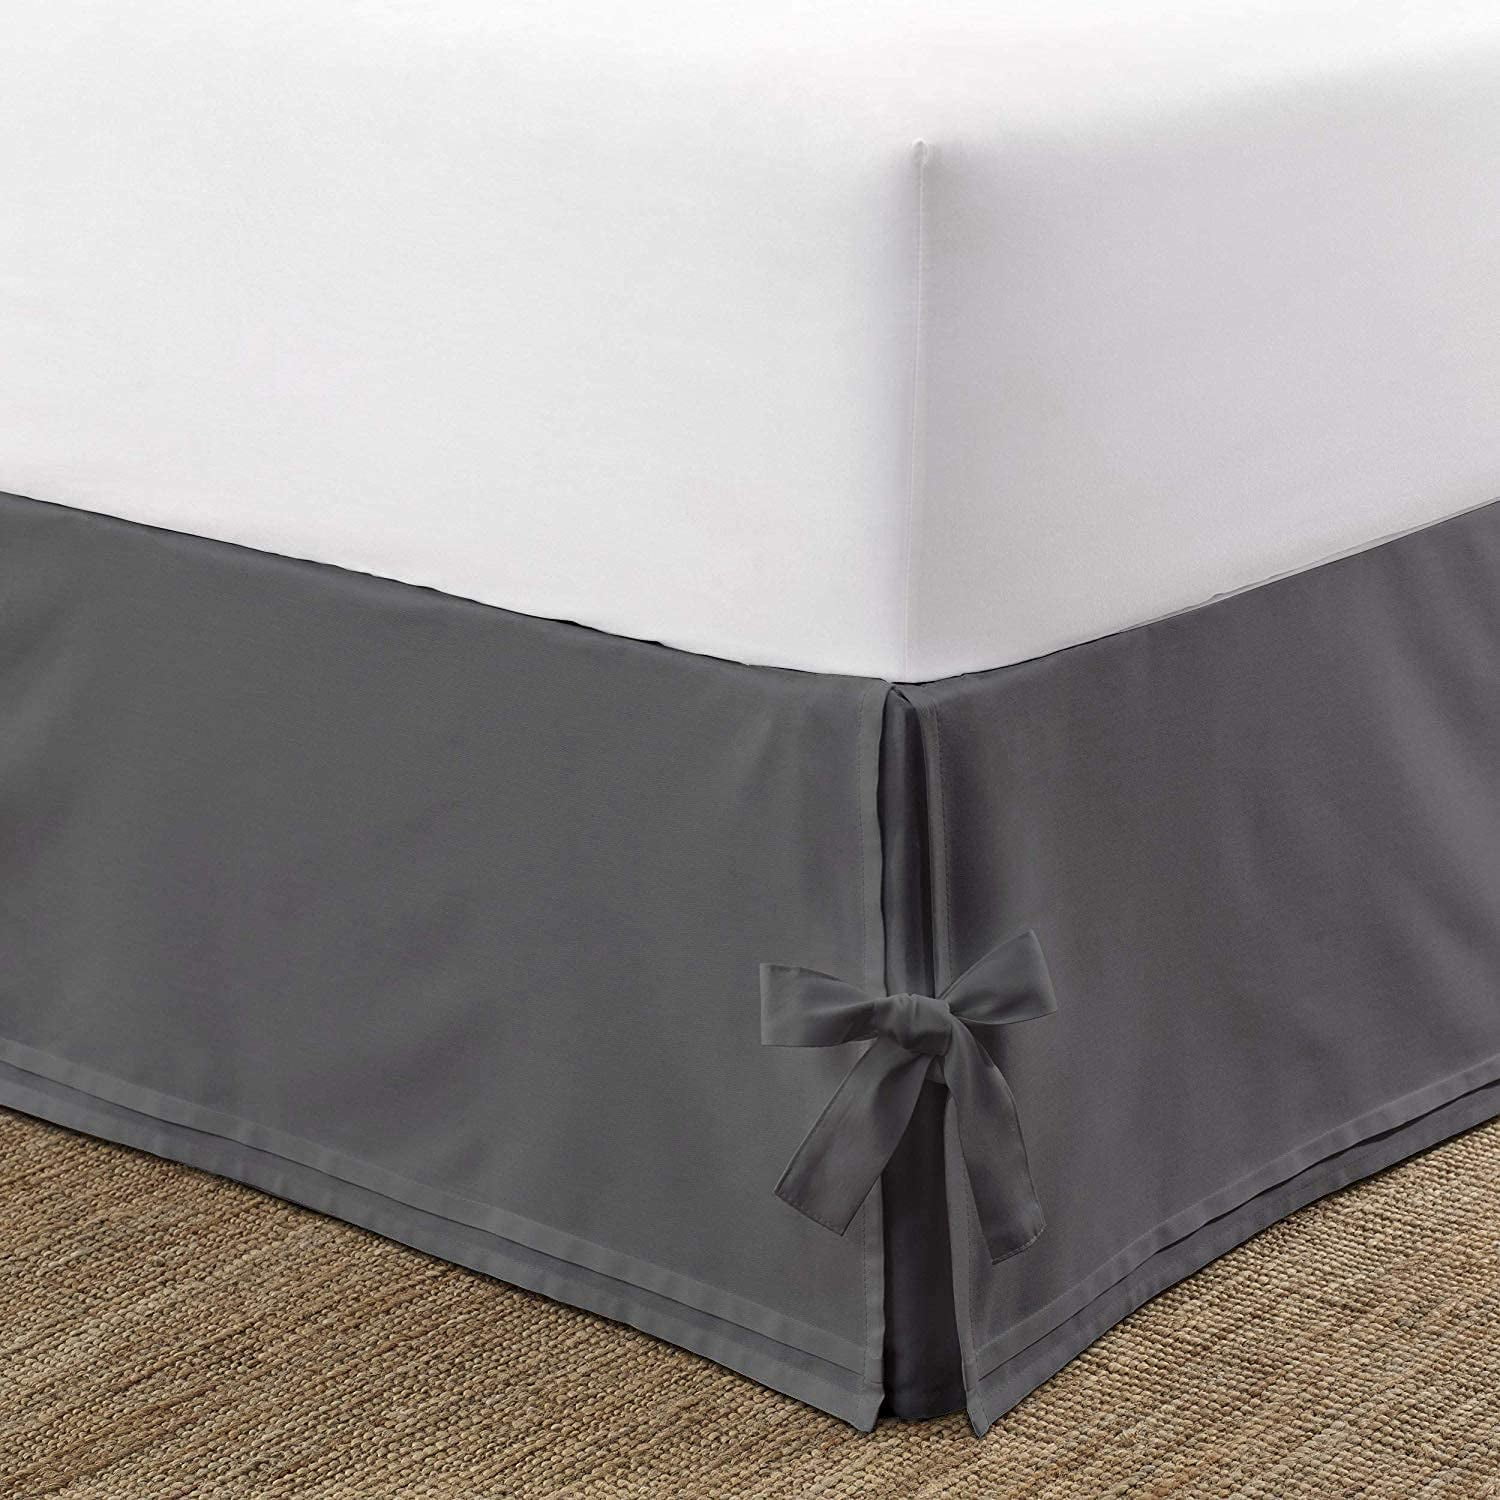 Gray Solid Ruffle Bed Skirt 650 TC Cotton Split Corner US Bed Size Drop Sale 